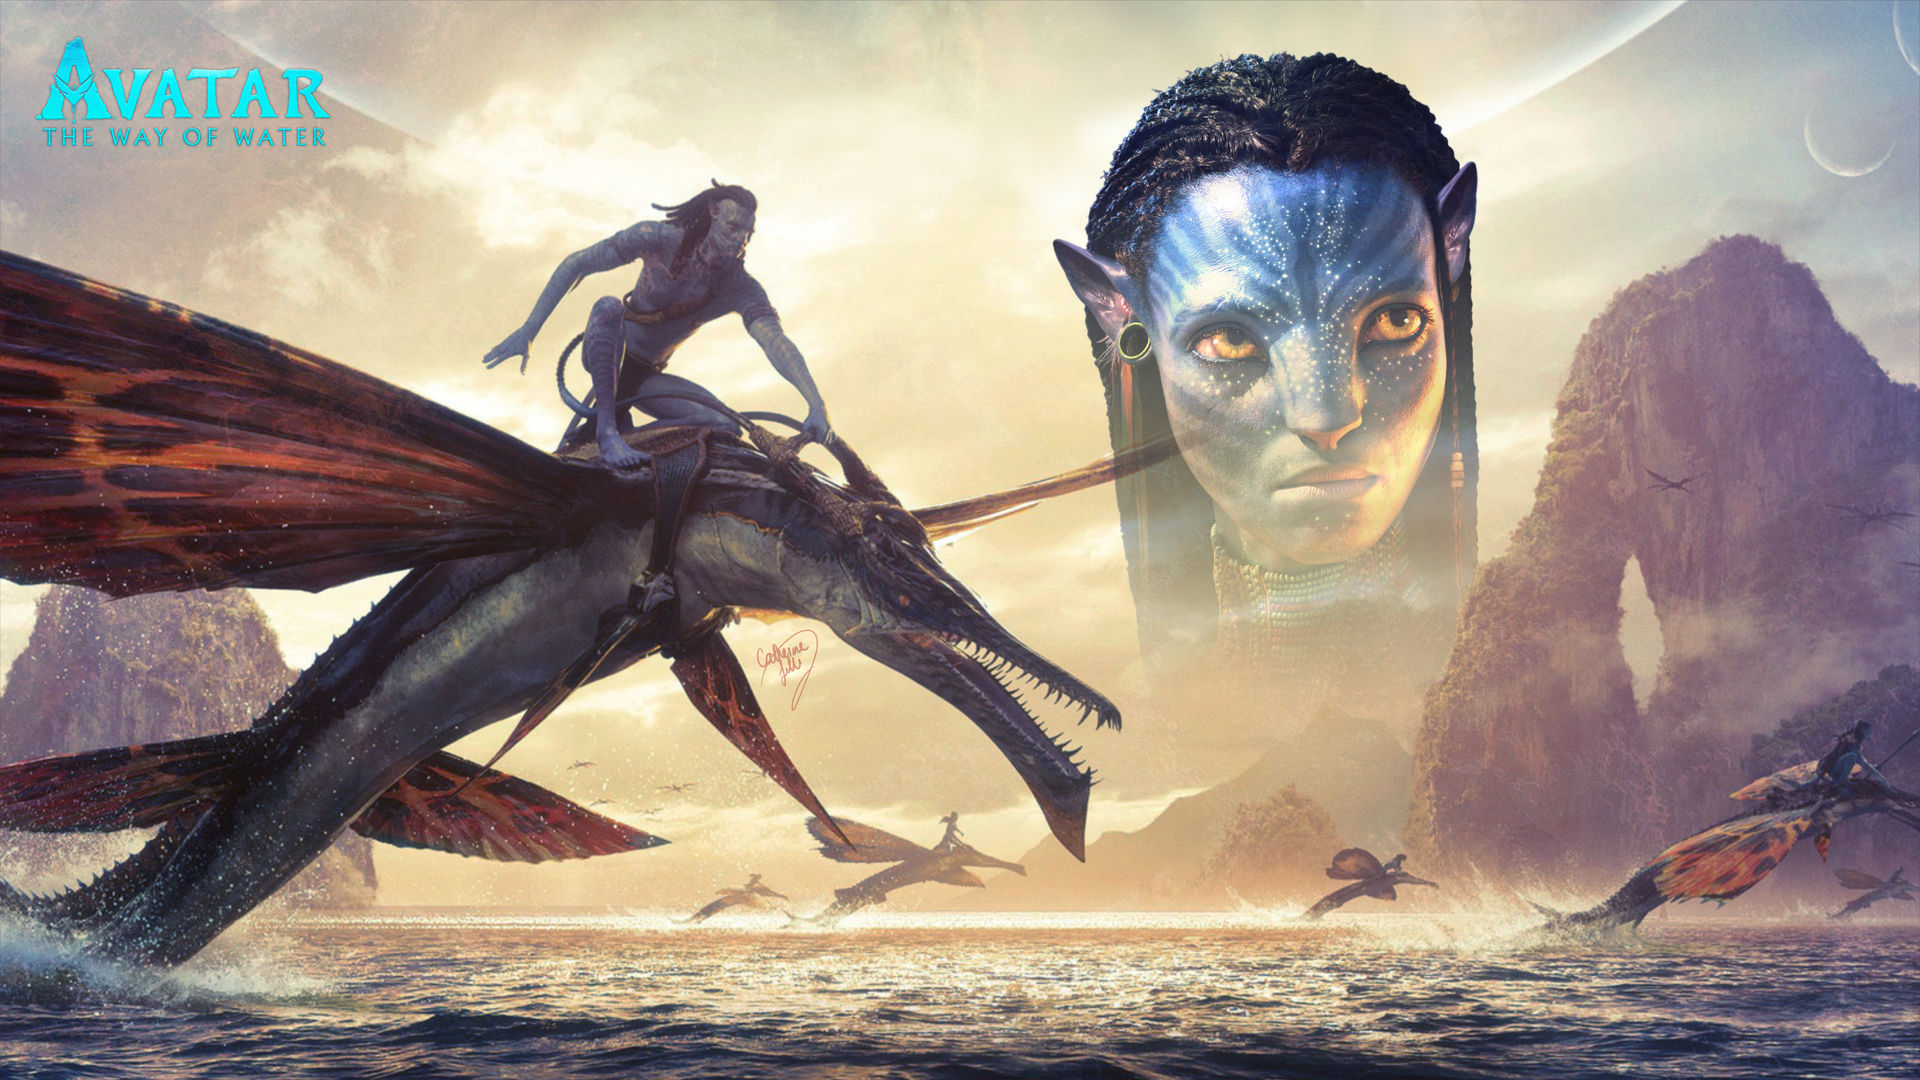 Avatar: The Way of Water - Wallpaper by Sekkitsu on DeviantArt